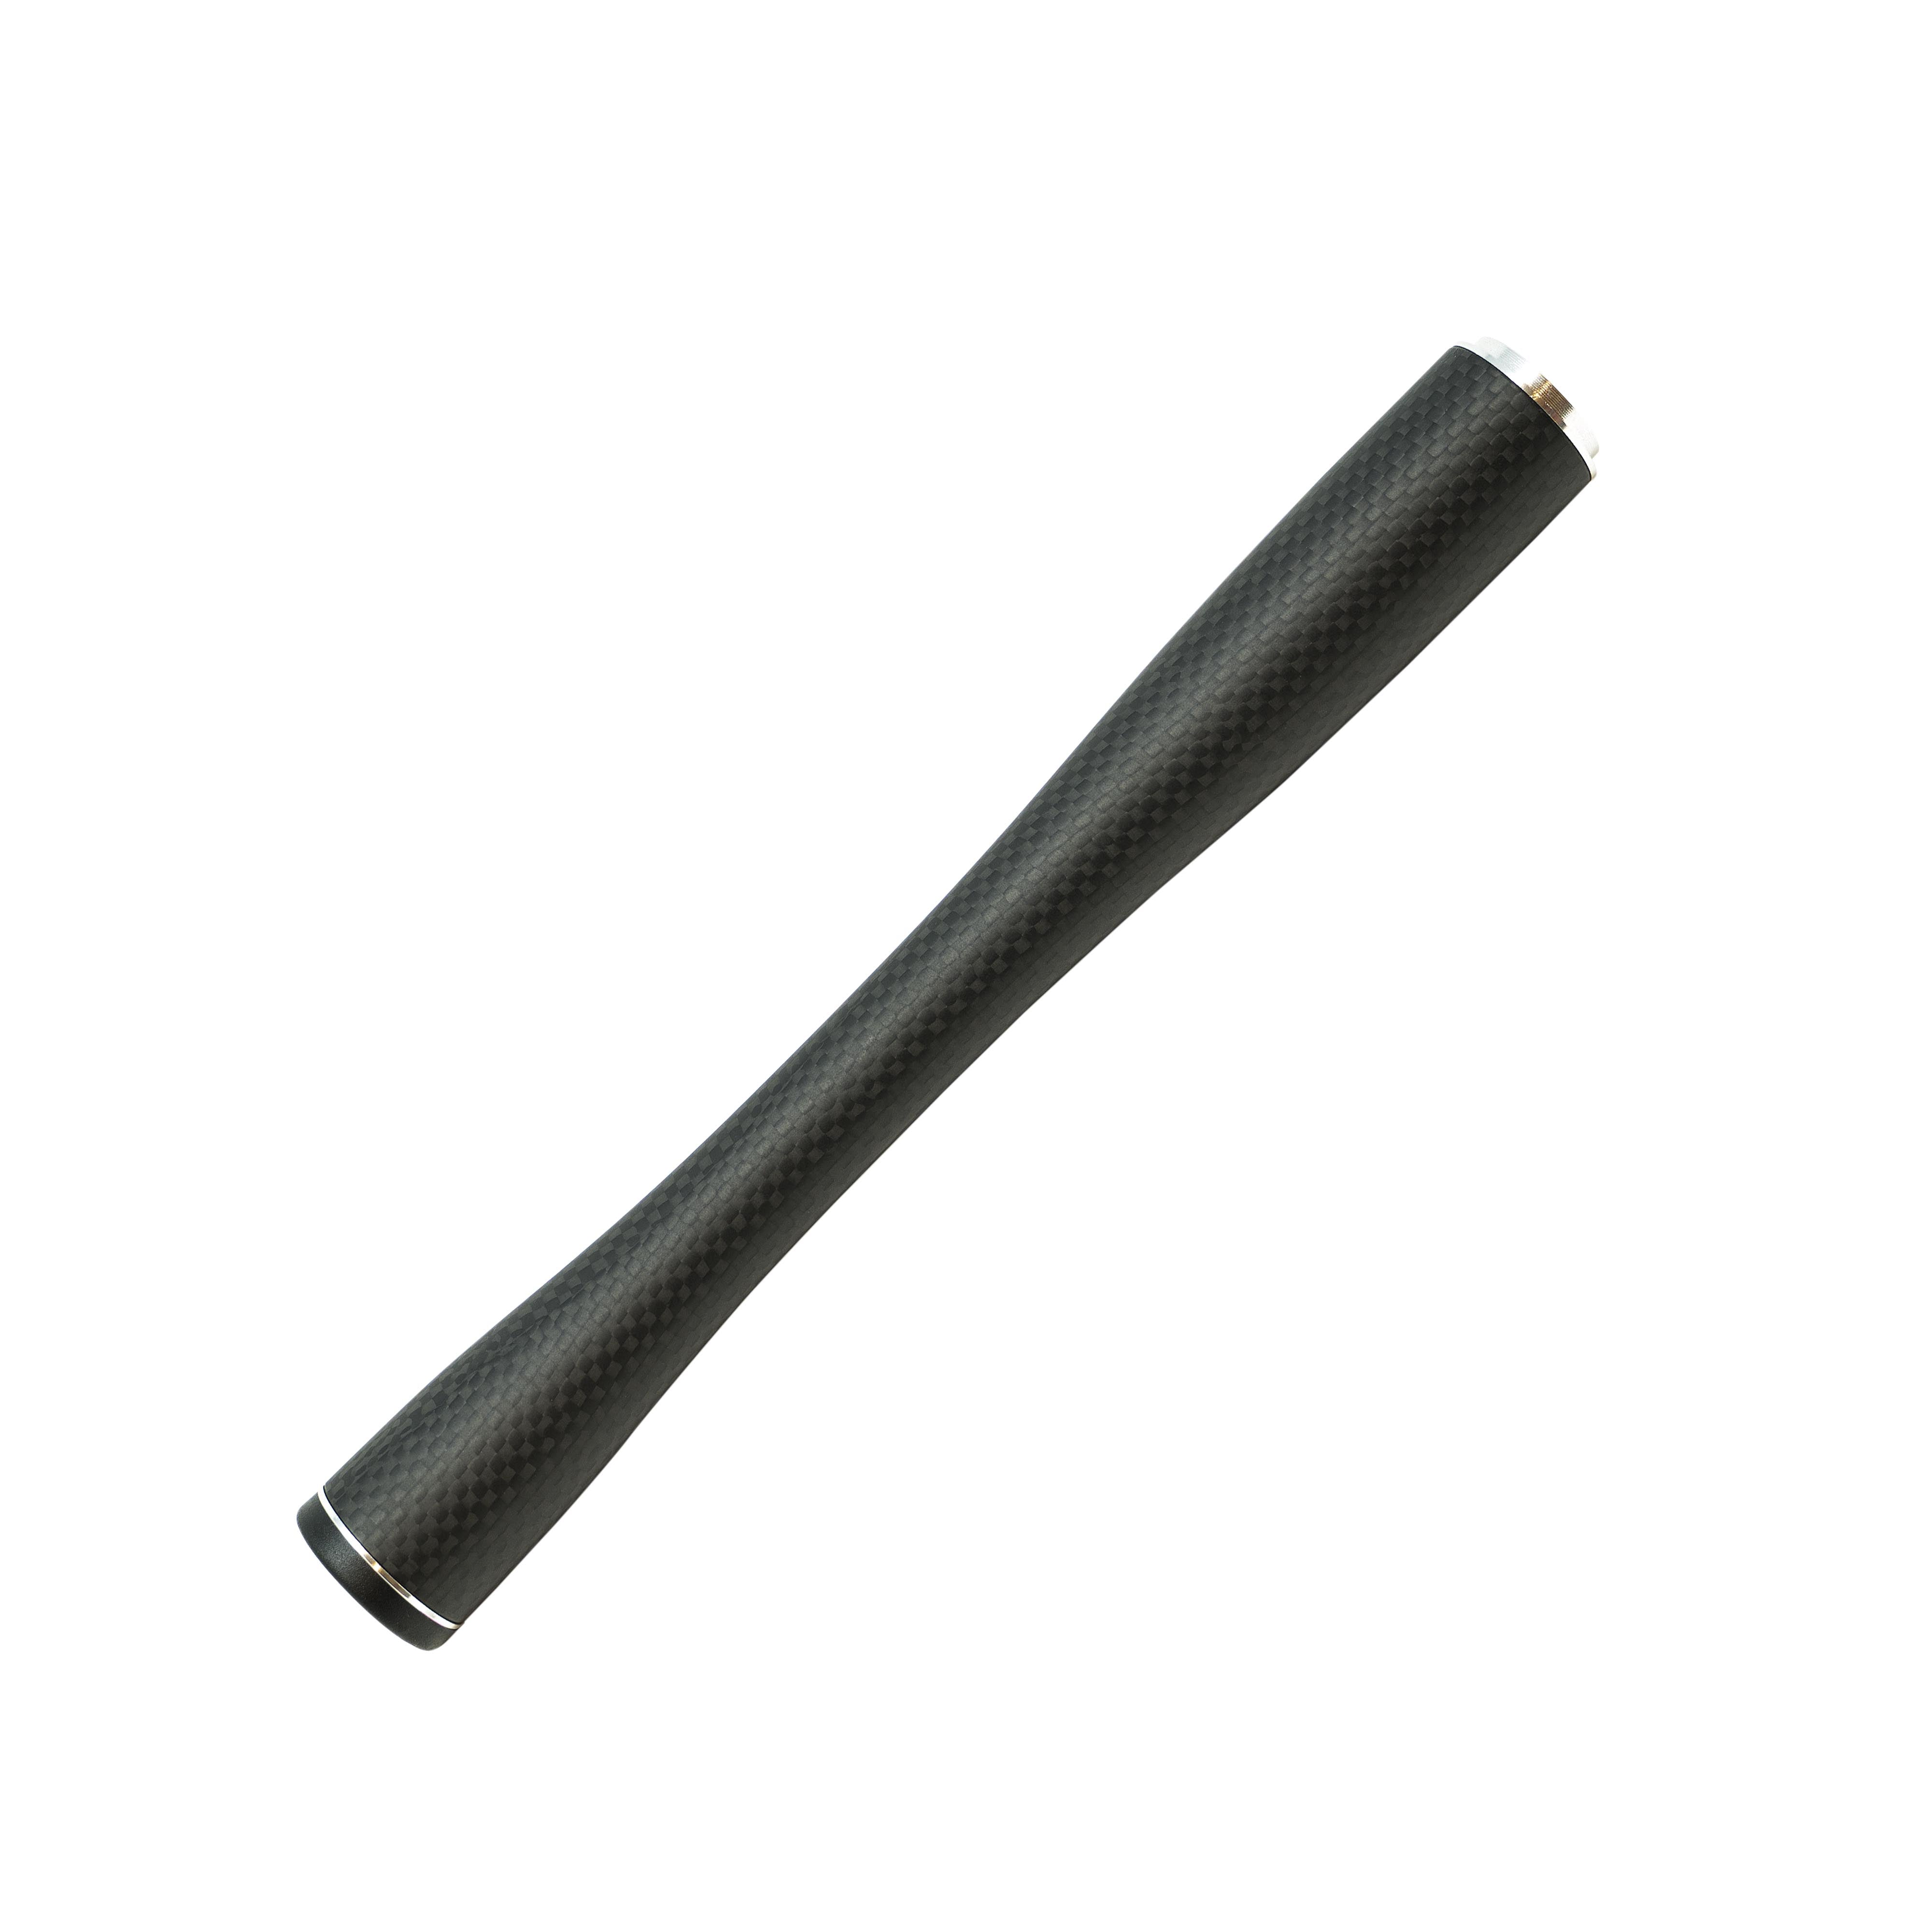 G2 12 Full Length Carbon Handle Grip Kit for Casting Rods, Silver / Matte 3K Carbon